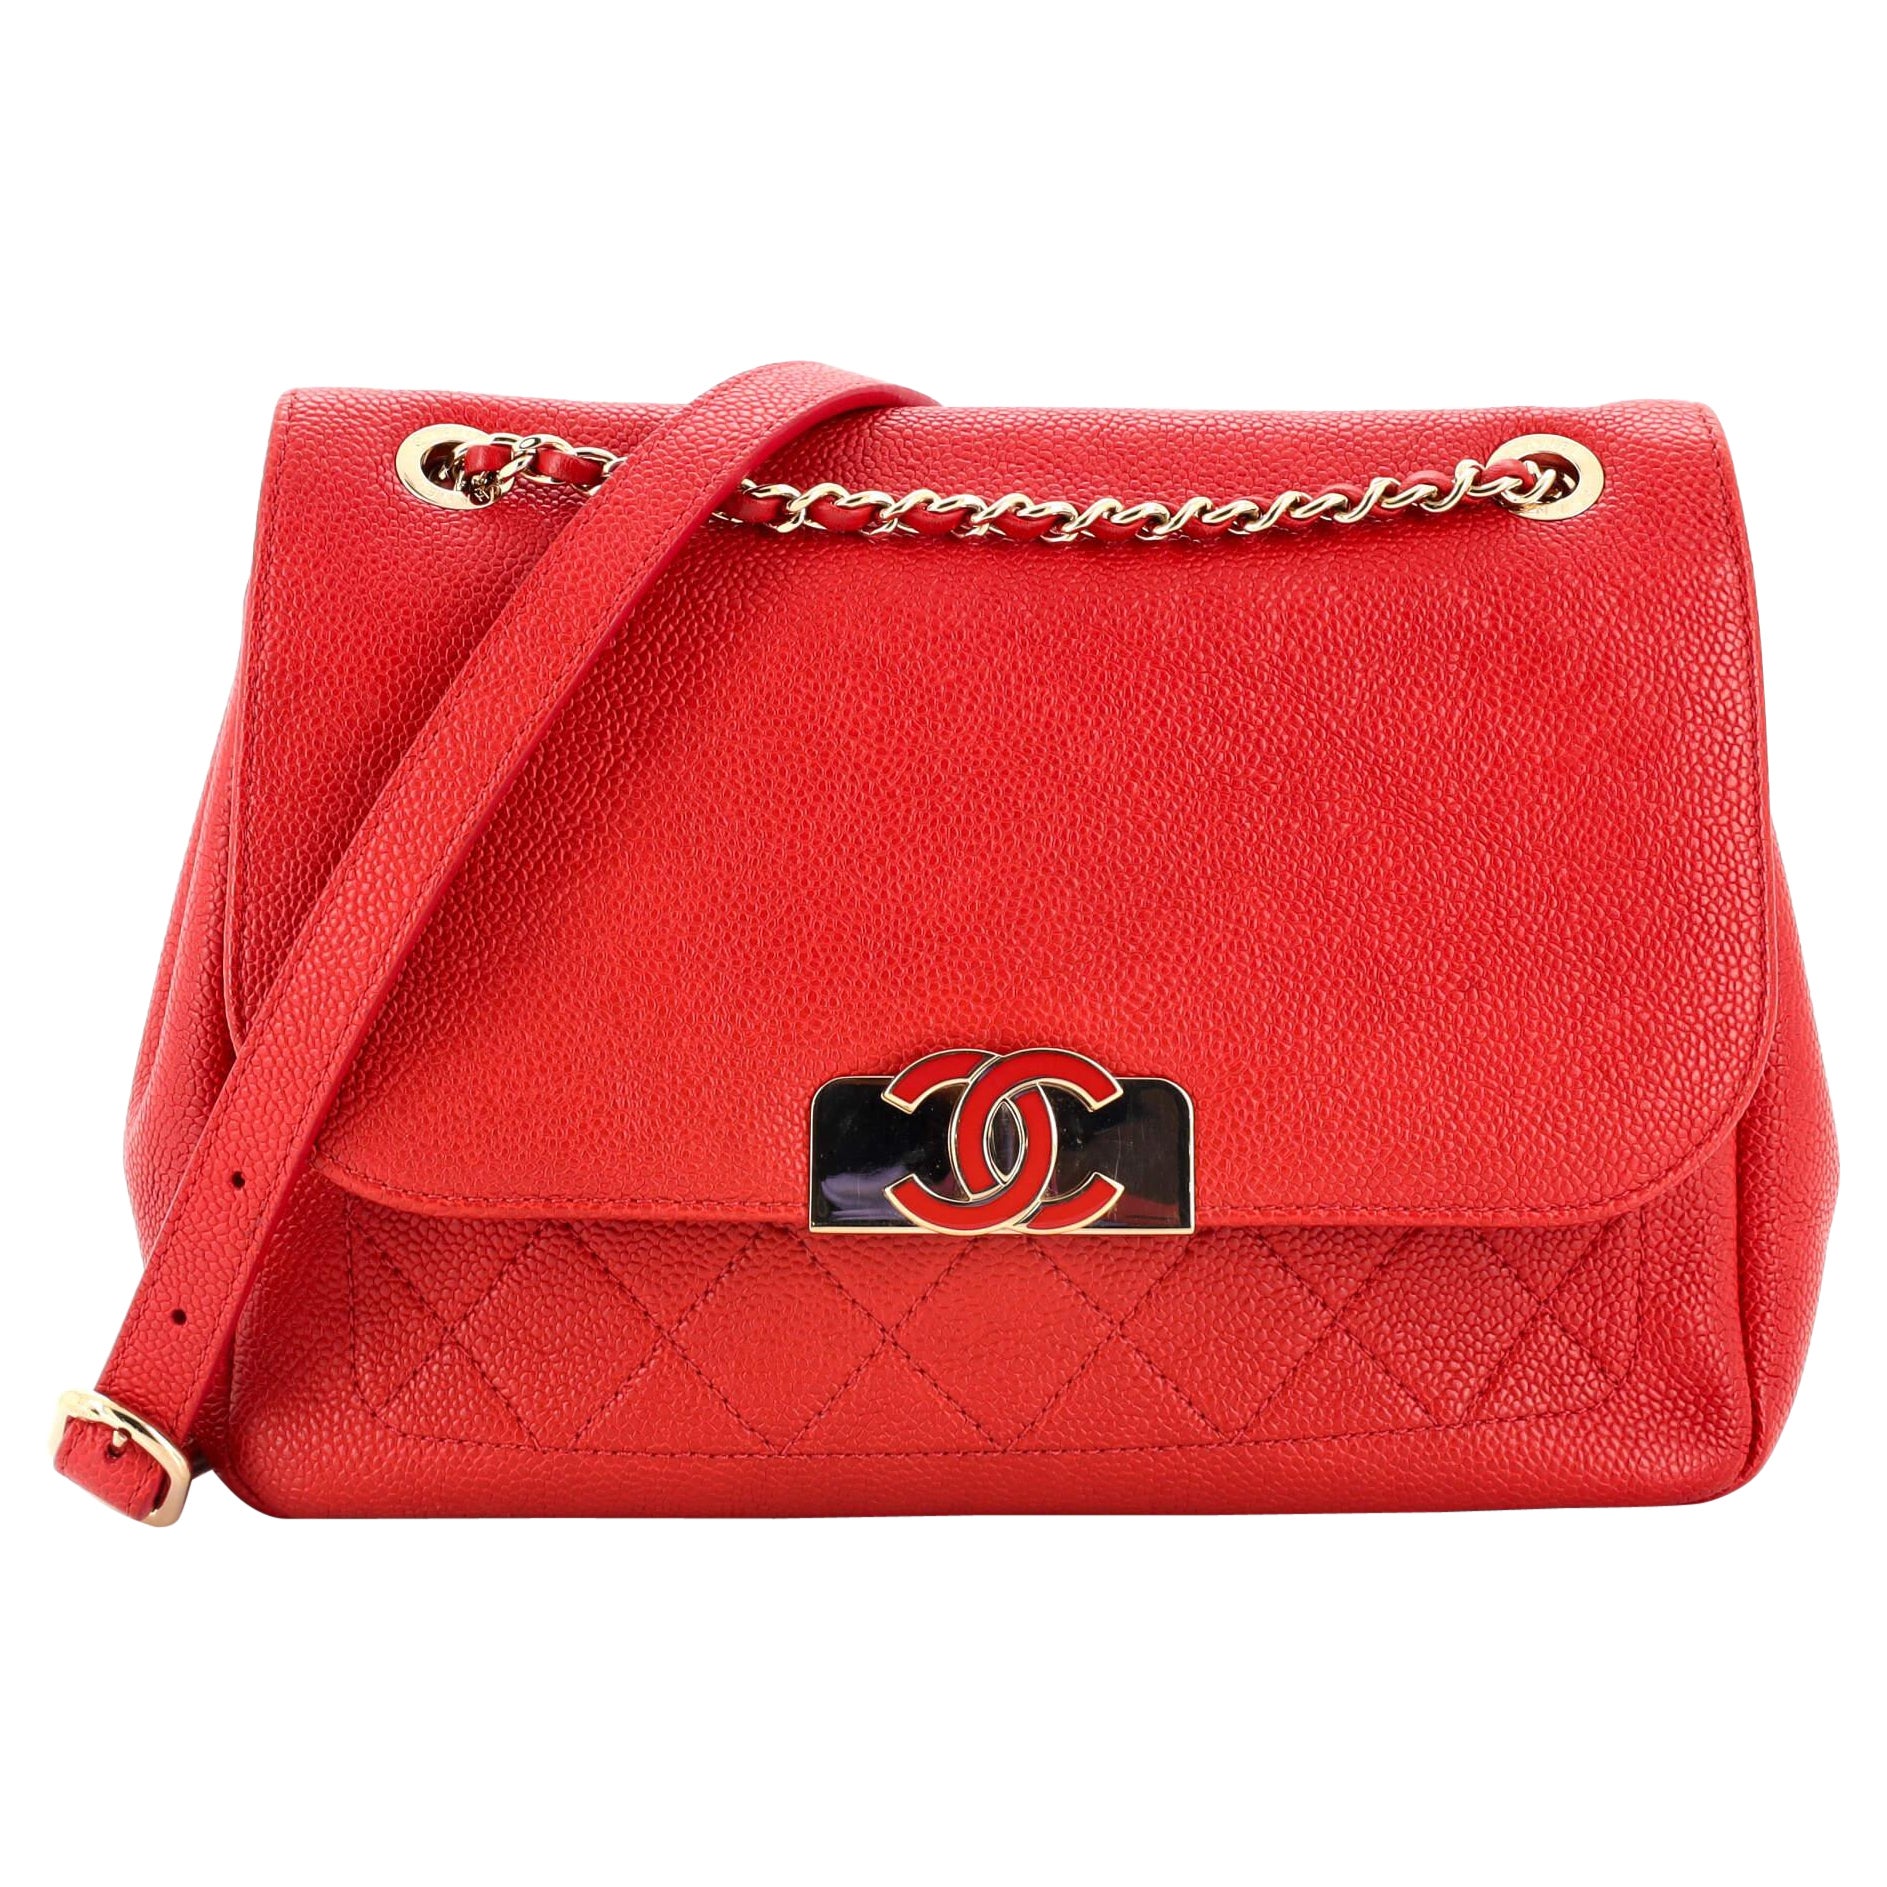 Chanel Red Blazer - 17 For Sale on 1stDibs